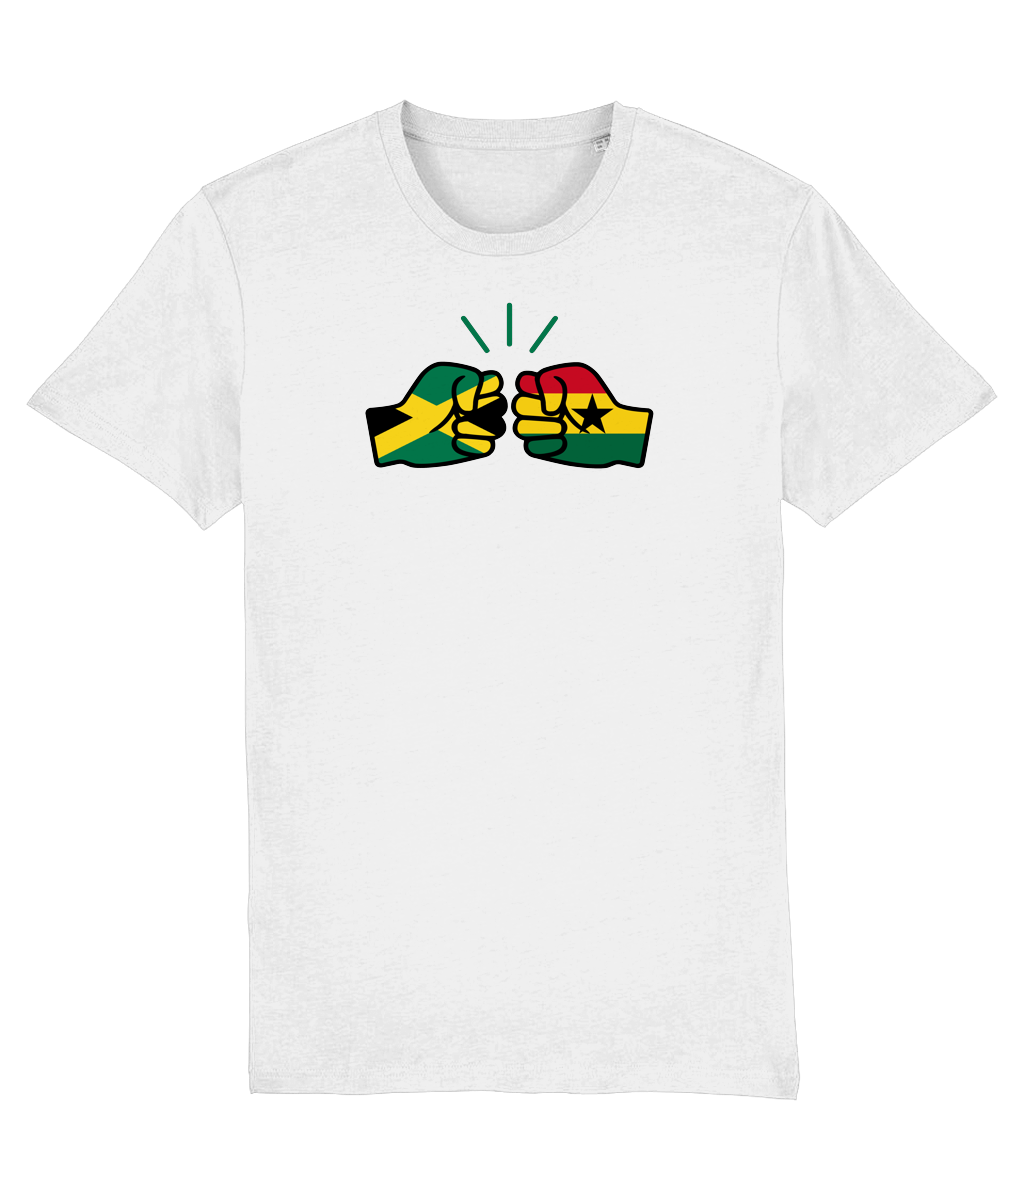 We Run Tings, Jamaica & Ghana, Men's, Dual Parentage, Organic Ring Spun Cotton T-Shirt, Outline